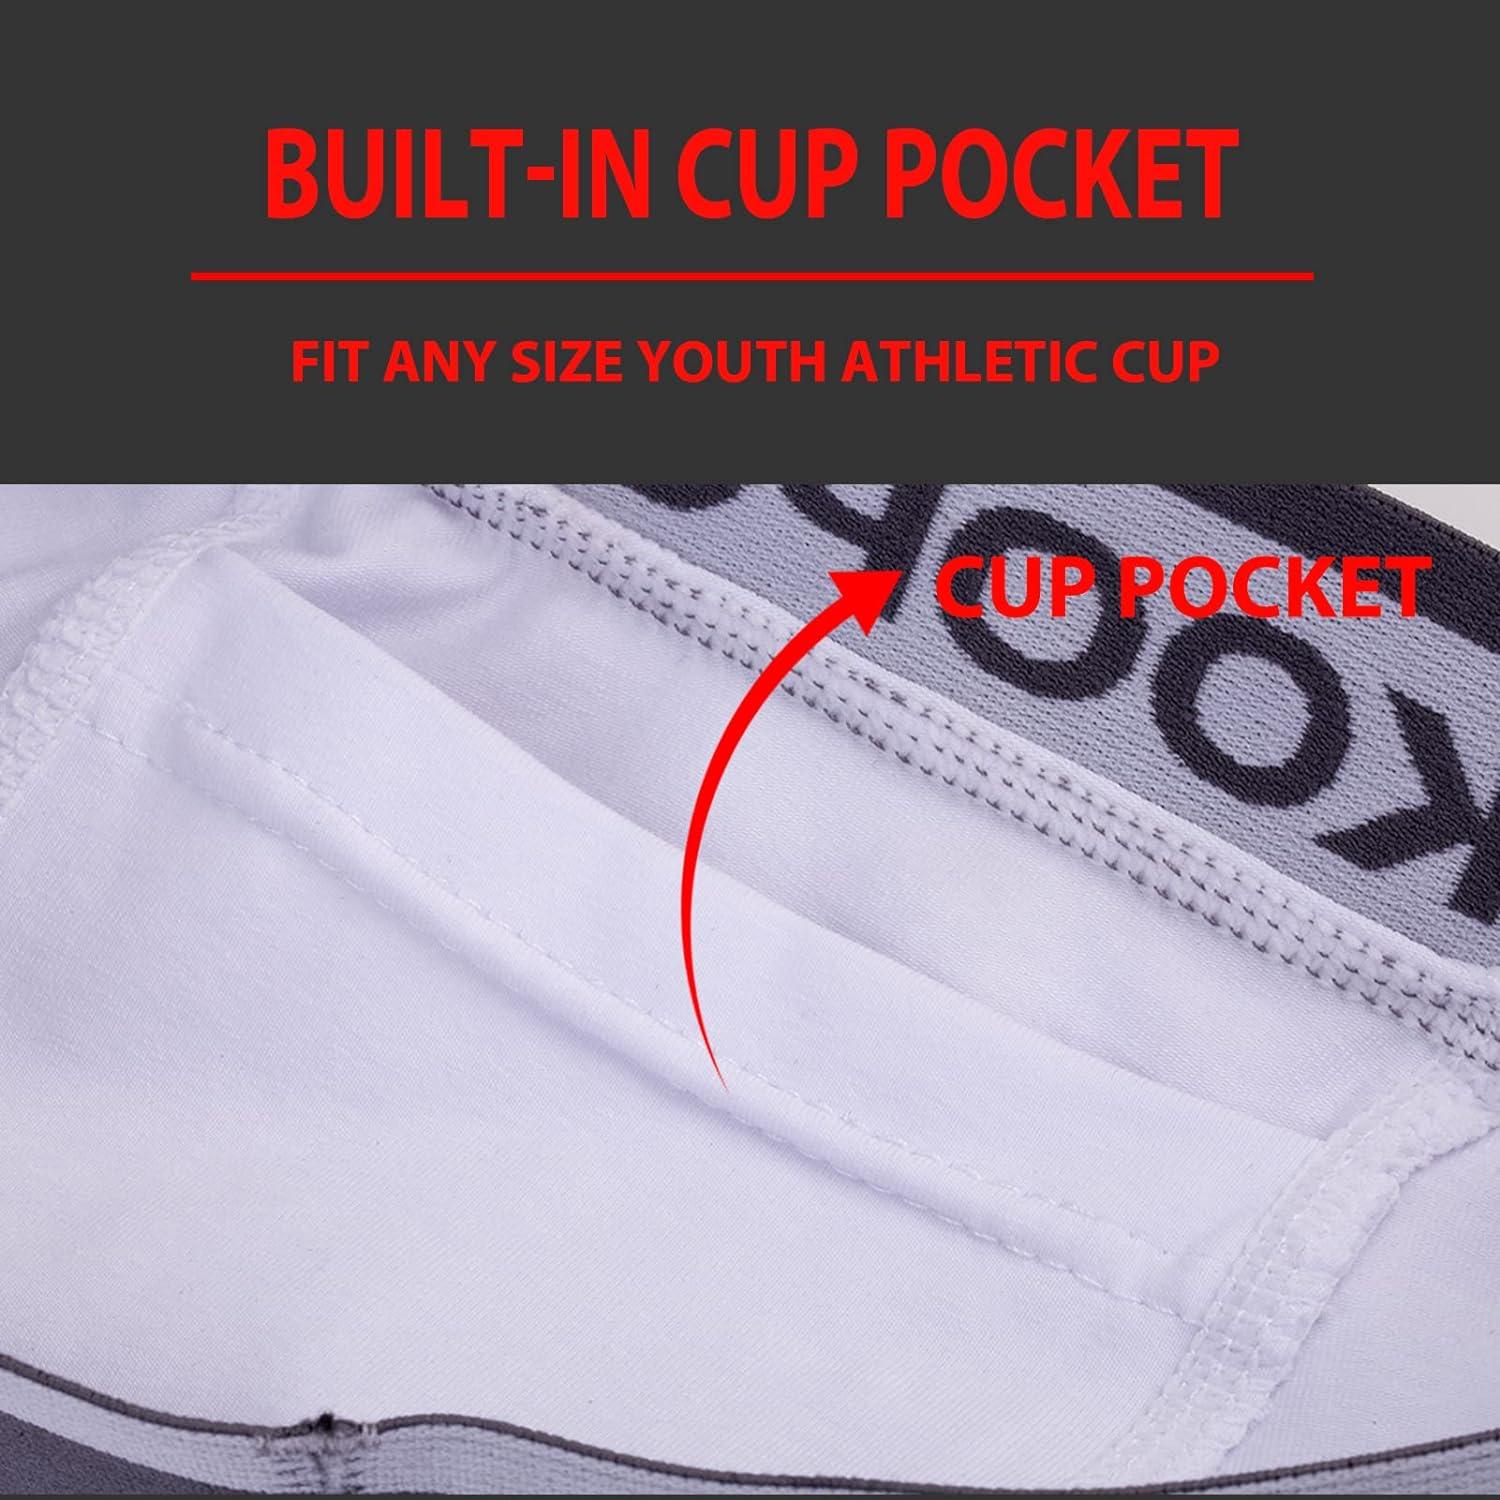  KOOPOW Youth Briefs Boys Compression Underwear with